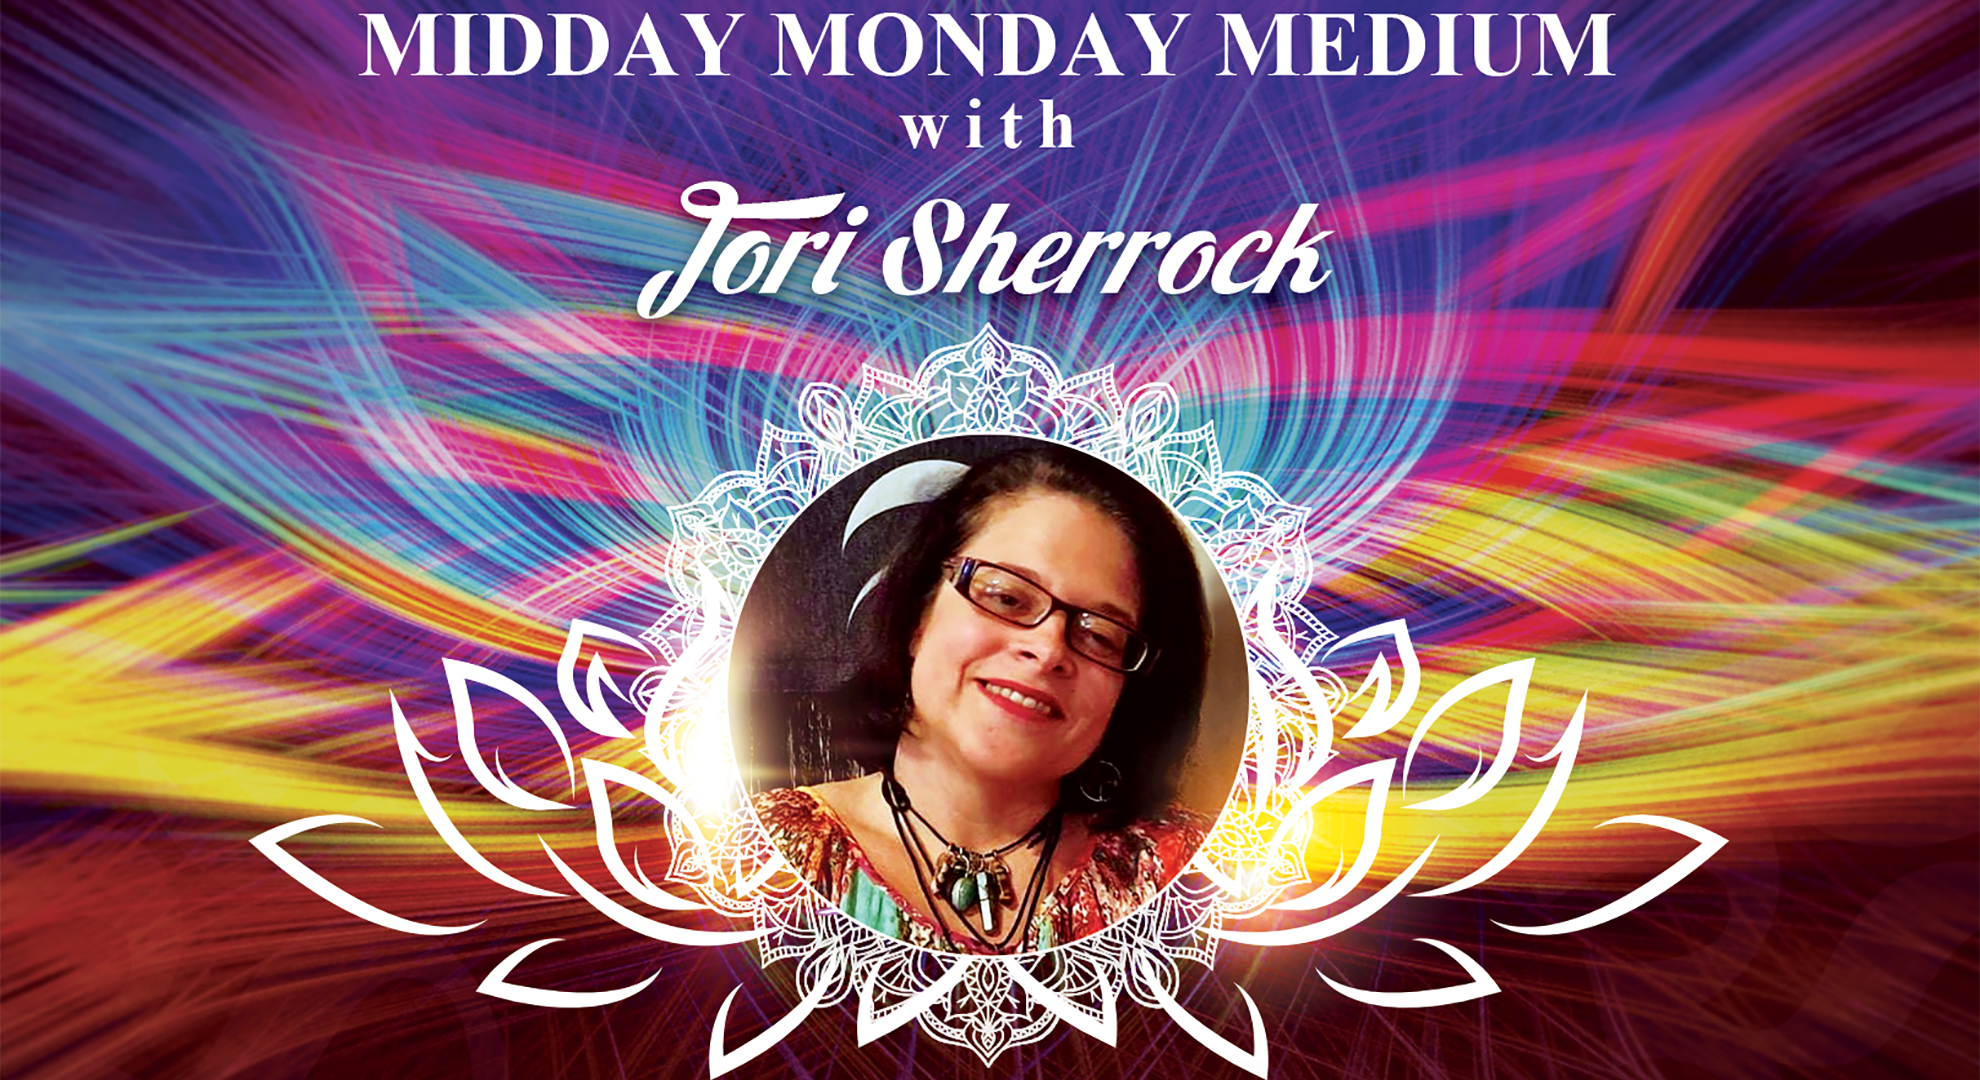 Midday Monday Medium with Tori Sherrock - Paranormal Programming